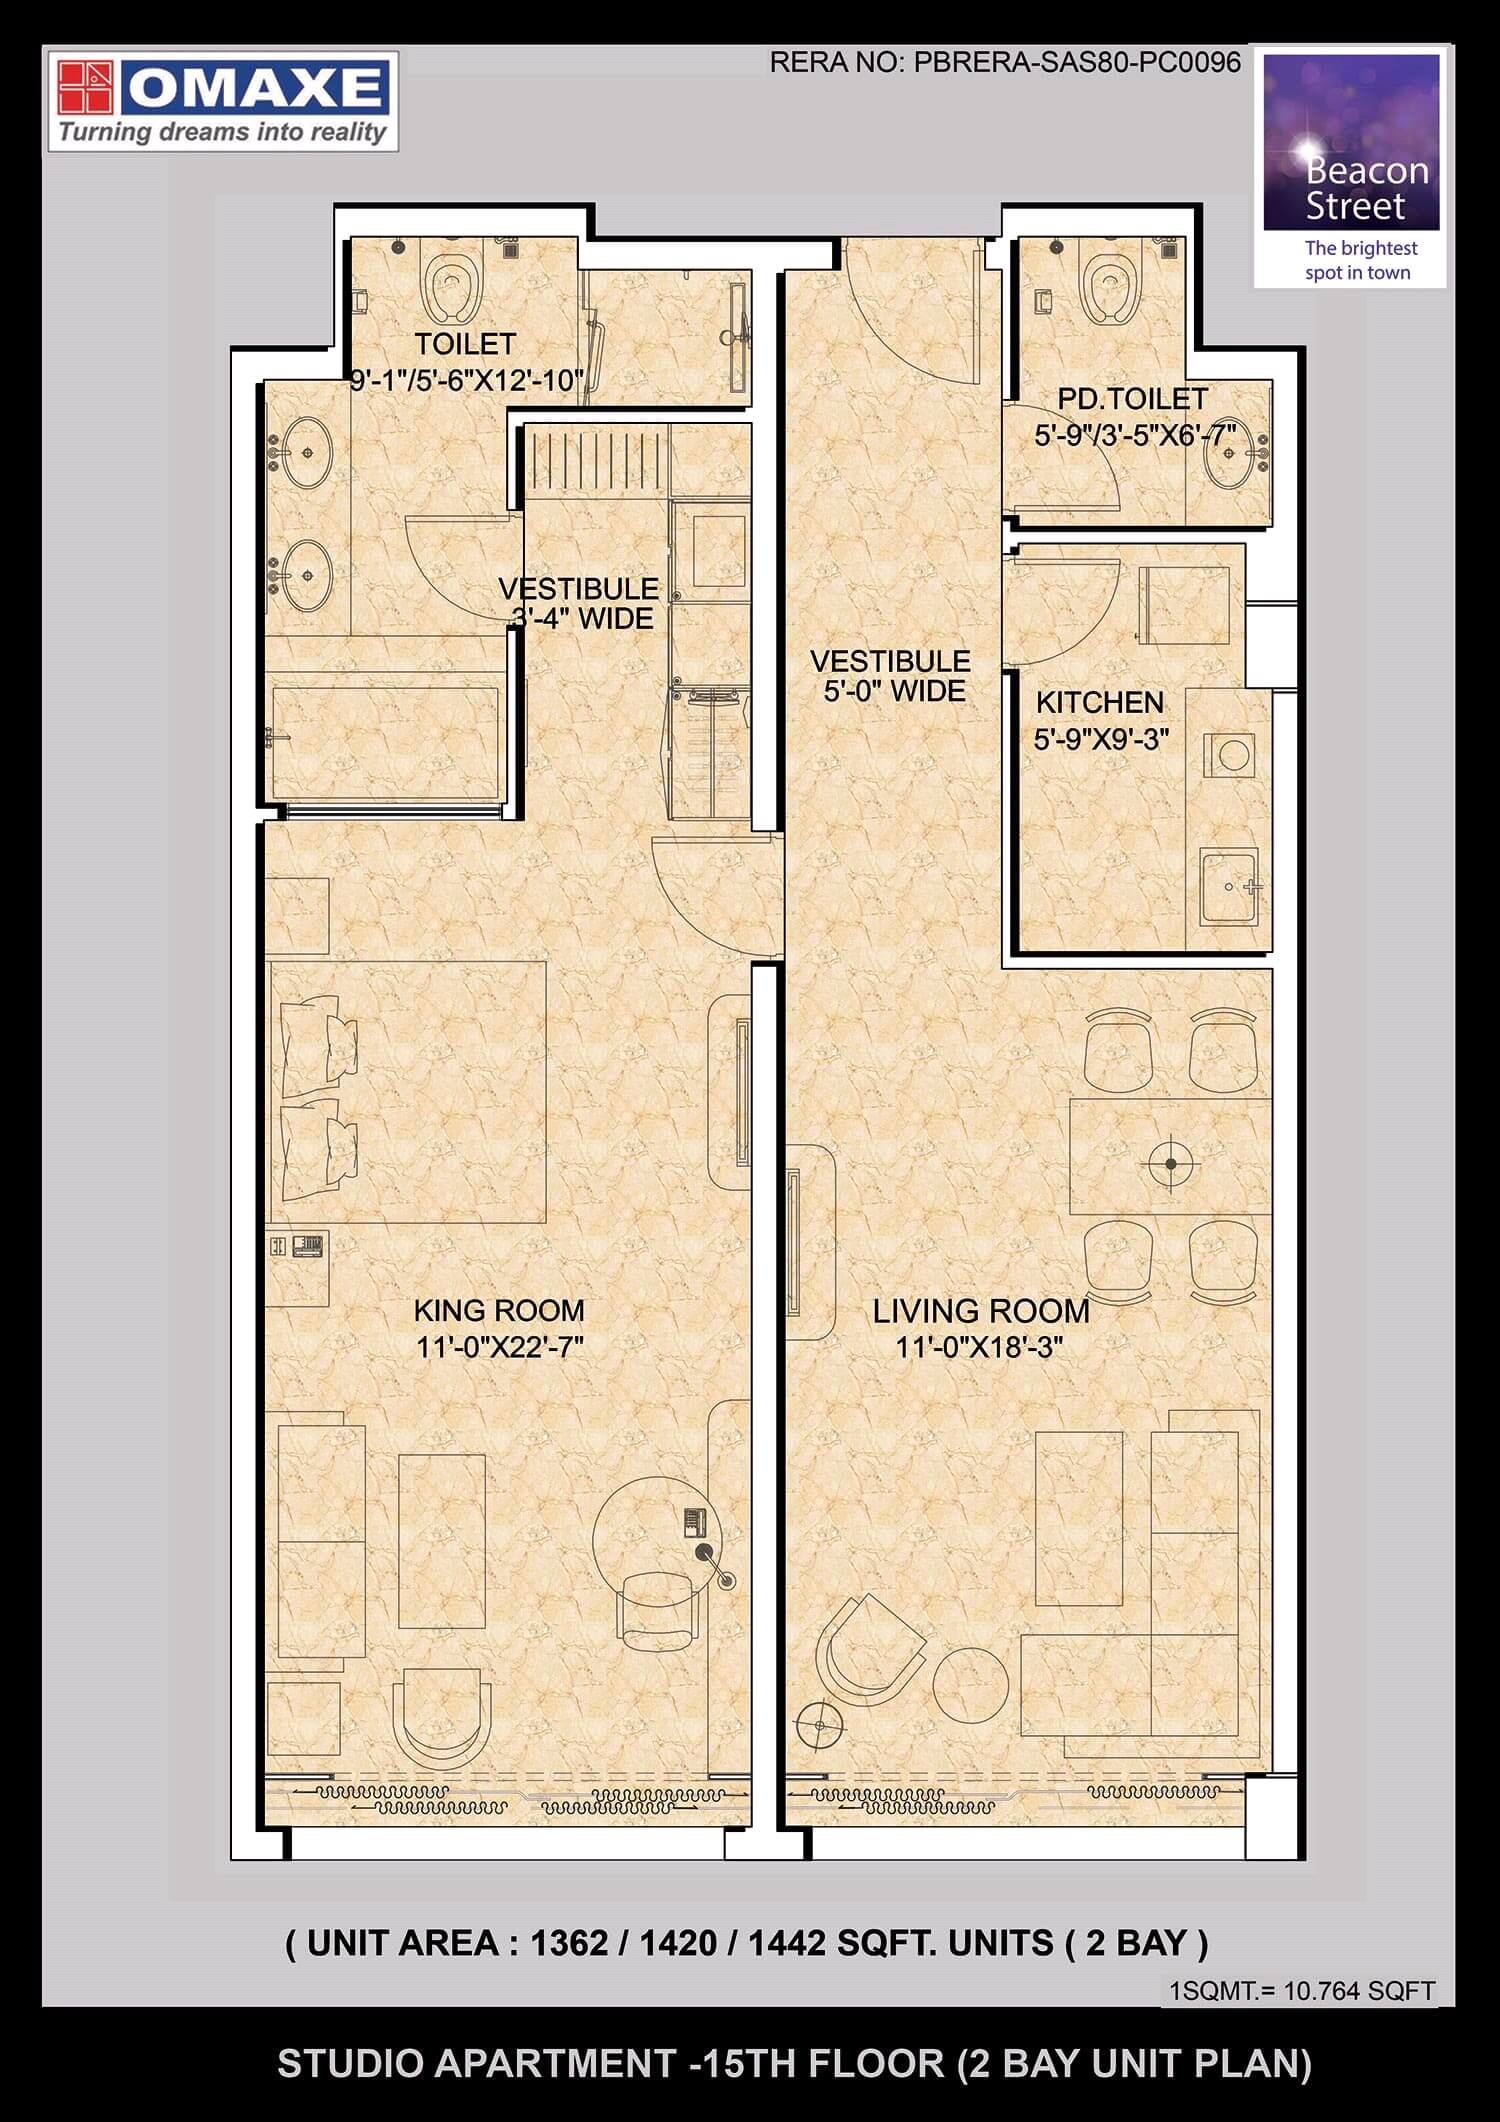 Omaxe Beacon Street Floor Plan